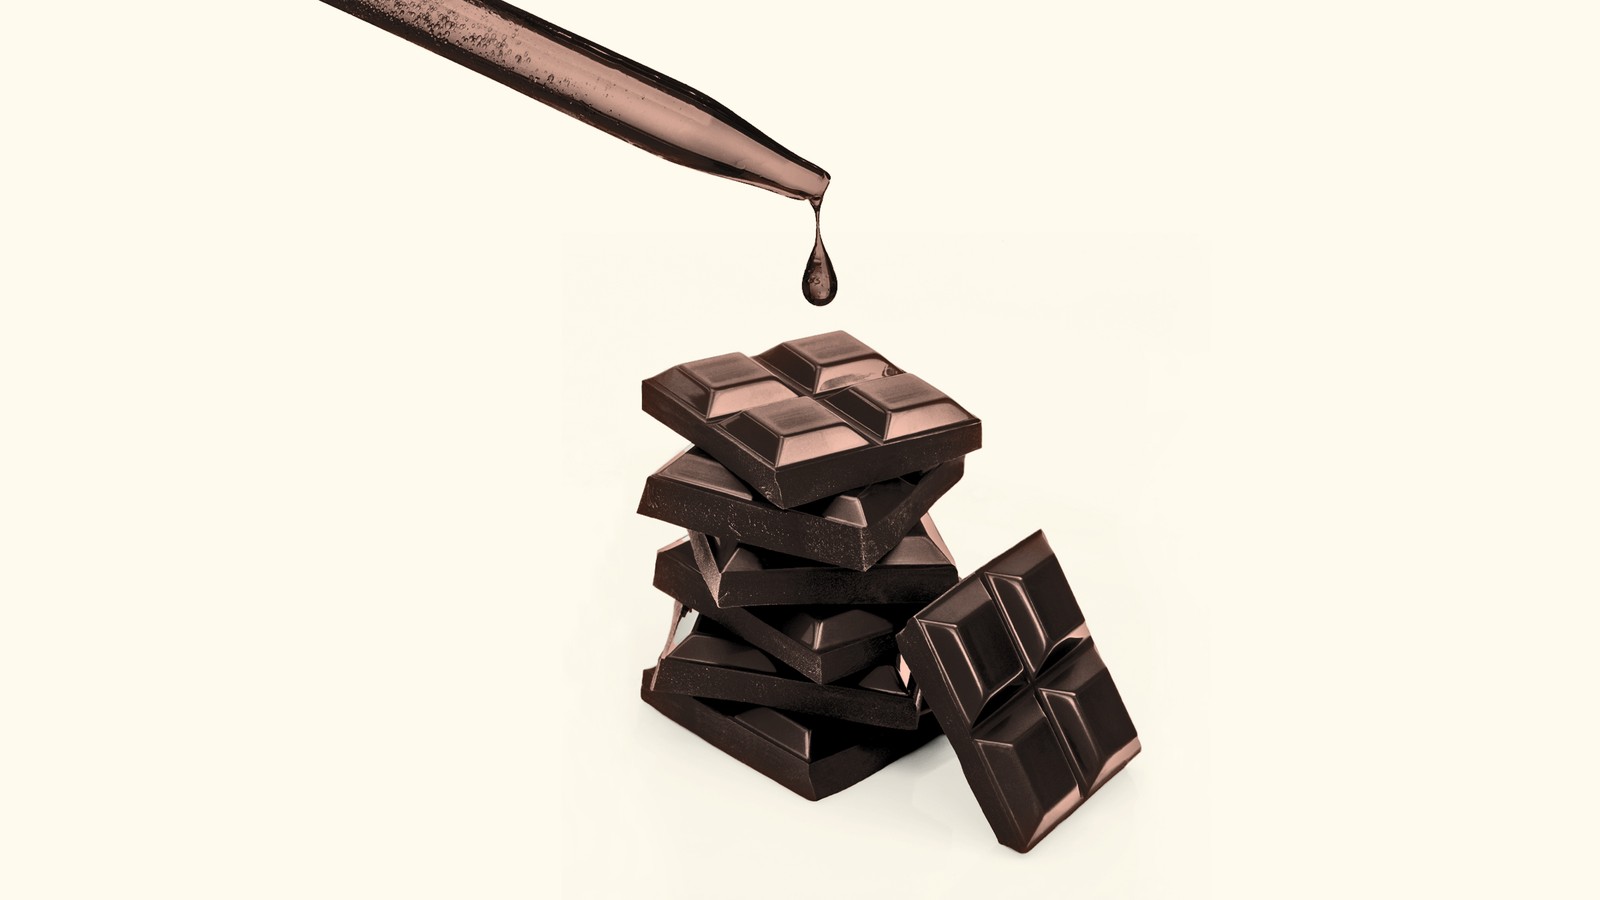 These chocolate tools are definitely realistic : r/mildlyinteresting